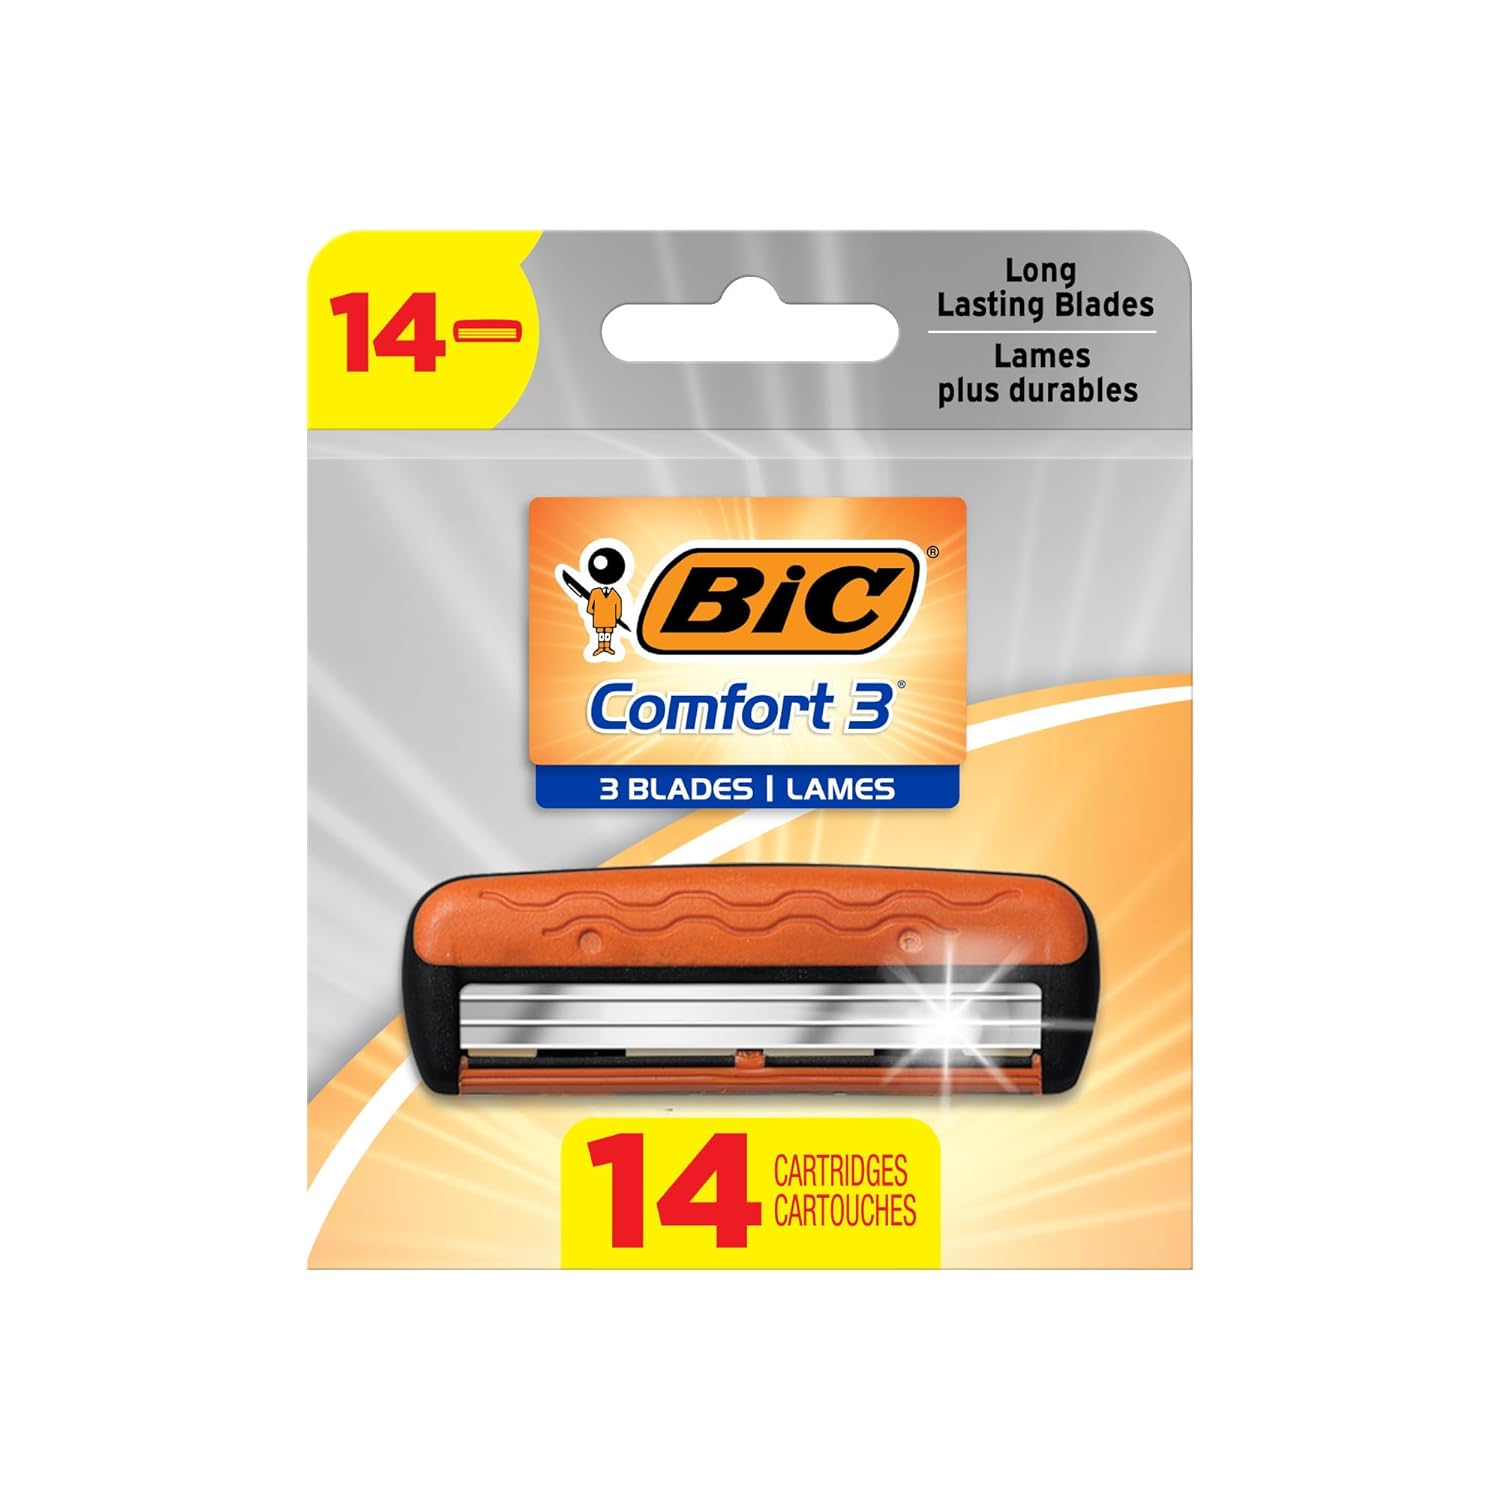 BIC Comfort 3 Refillable Refill Razor Cartridges, Three-Blade Disposable Razors for Men, Sensitive Skin Razor for a Comfortable Shave, 14 Razor Refill Cartridges